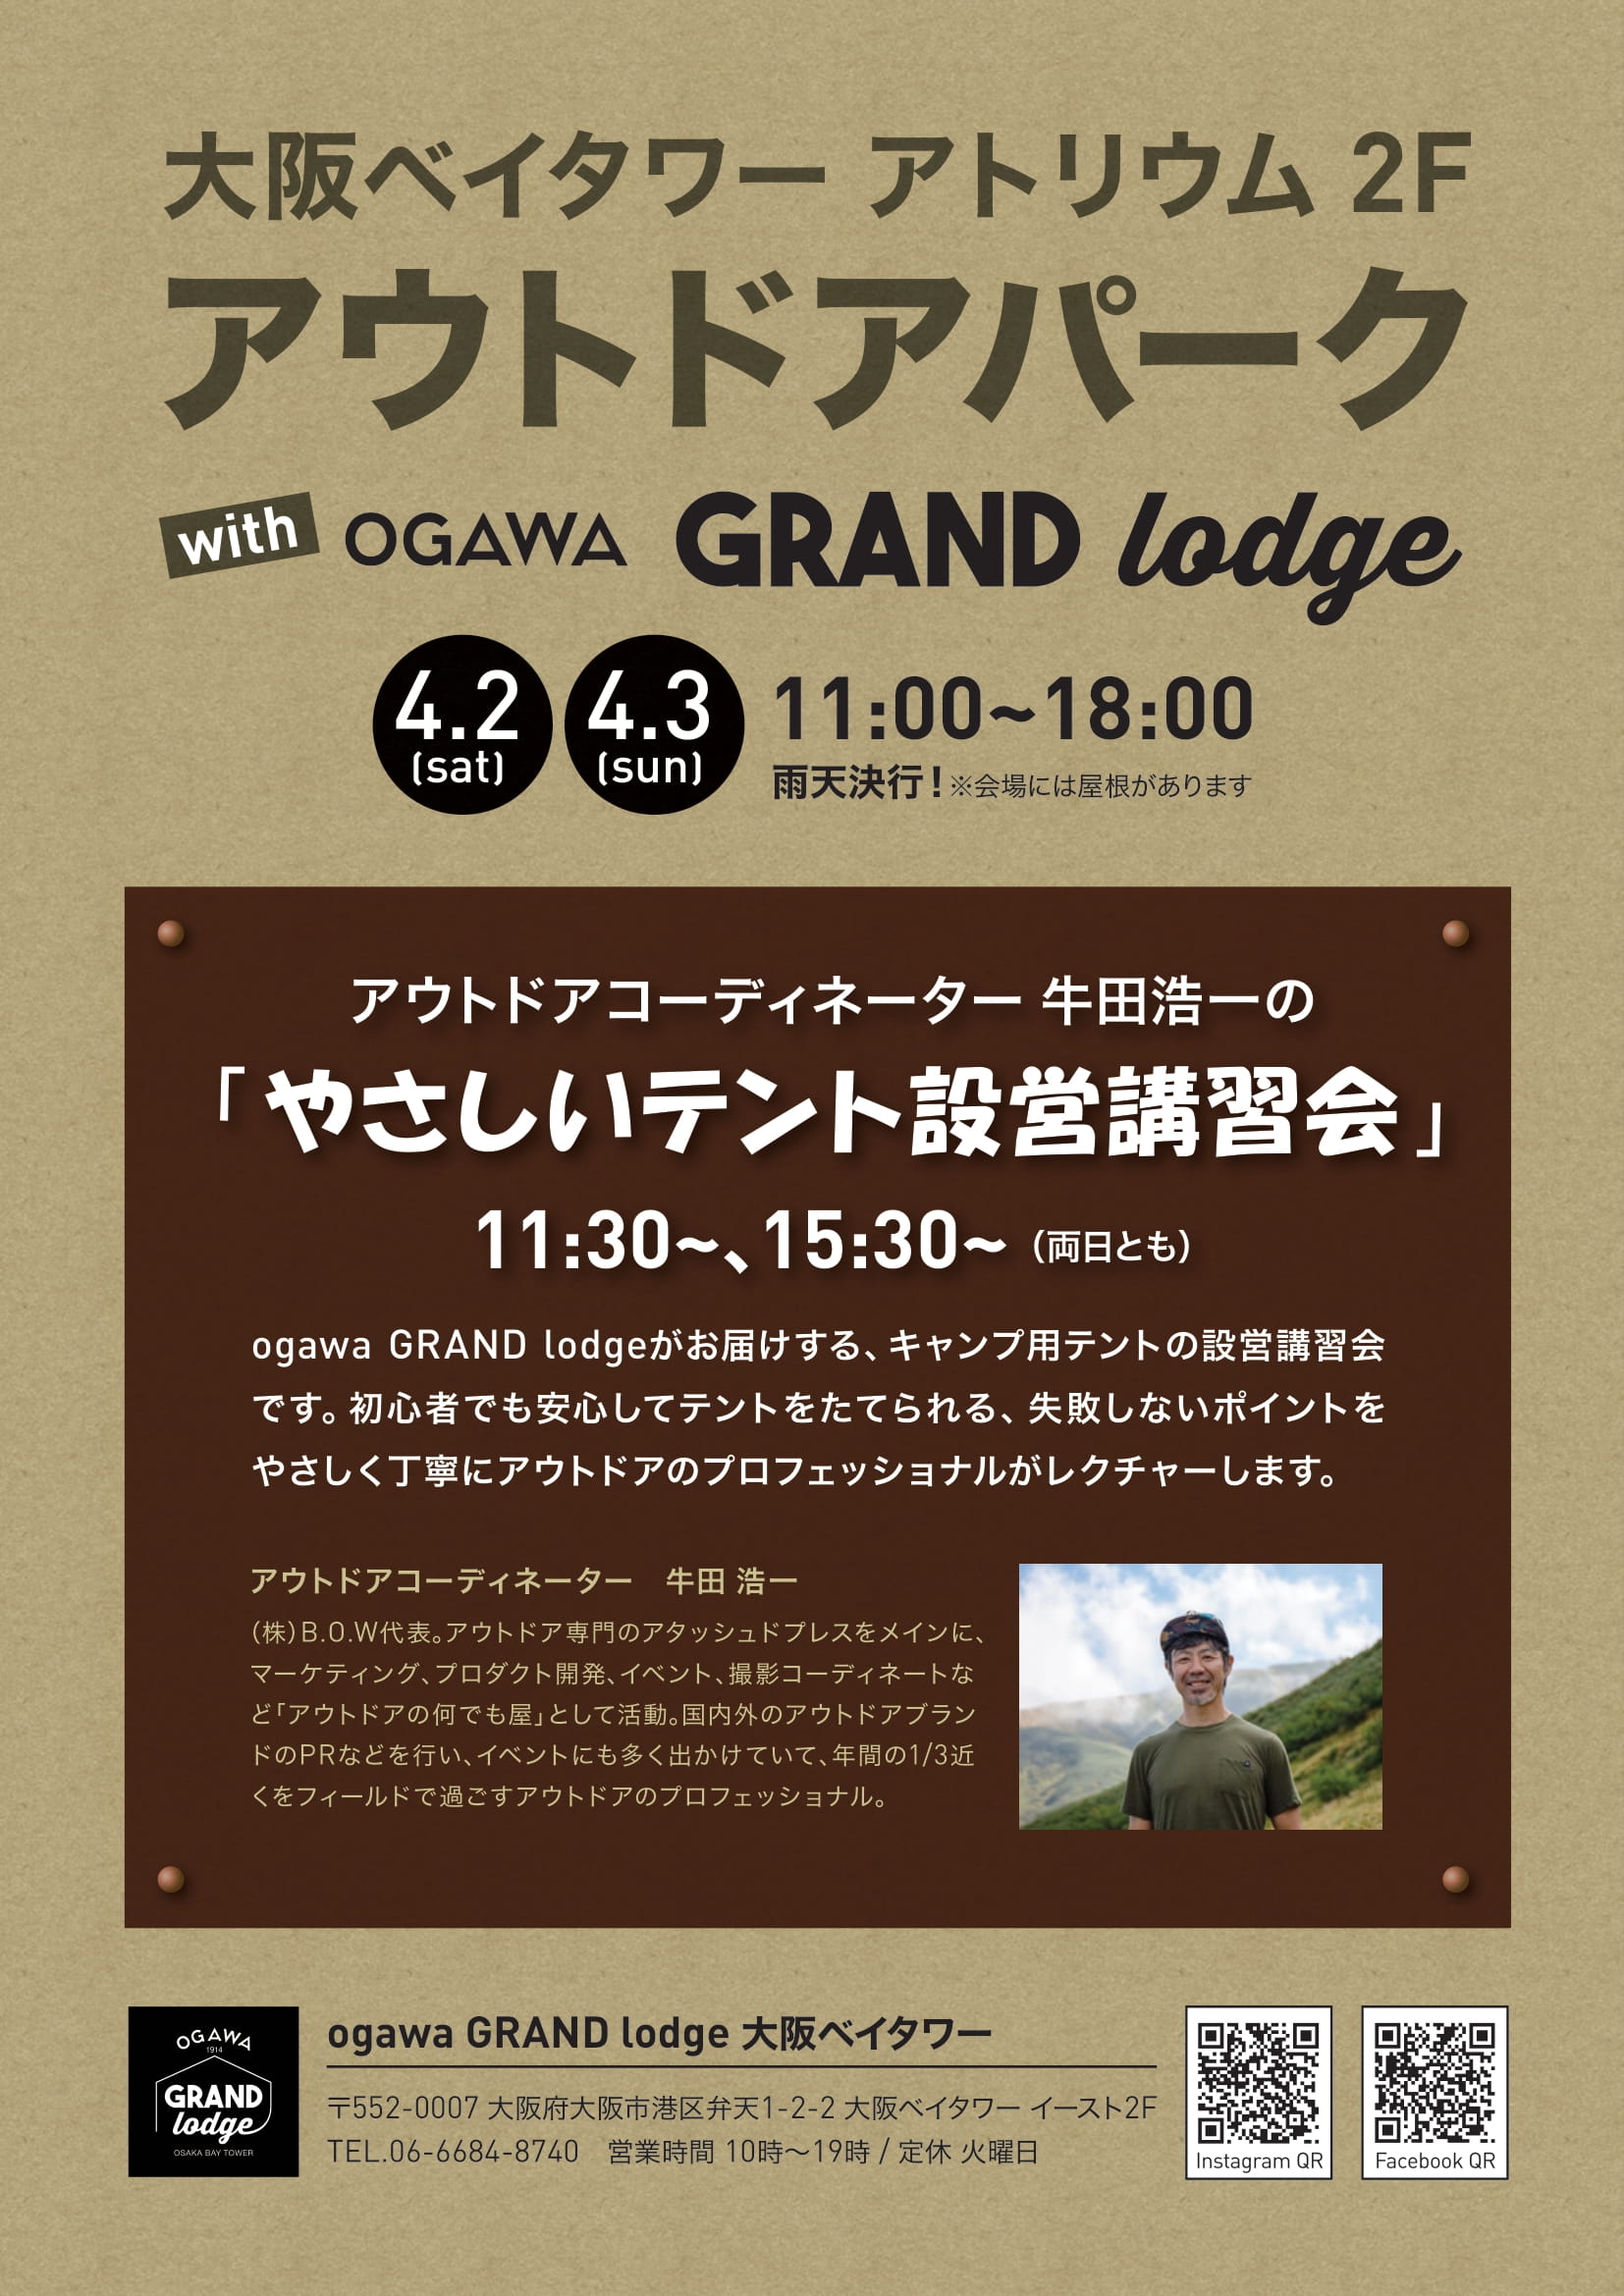 ogawa GRAND lodge 大阪ベイタワー」オープンのお知らせ | News 